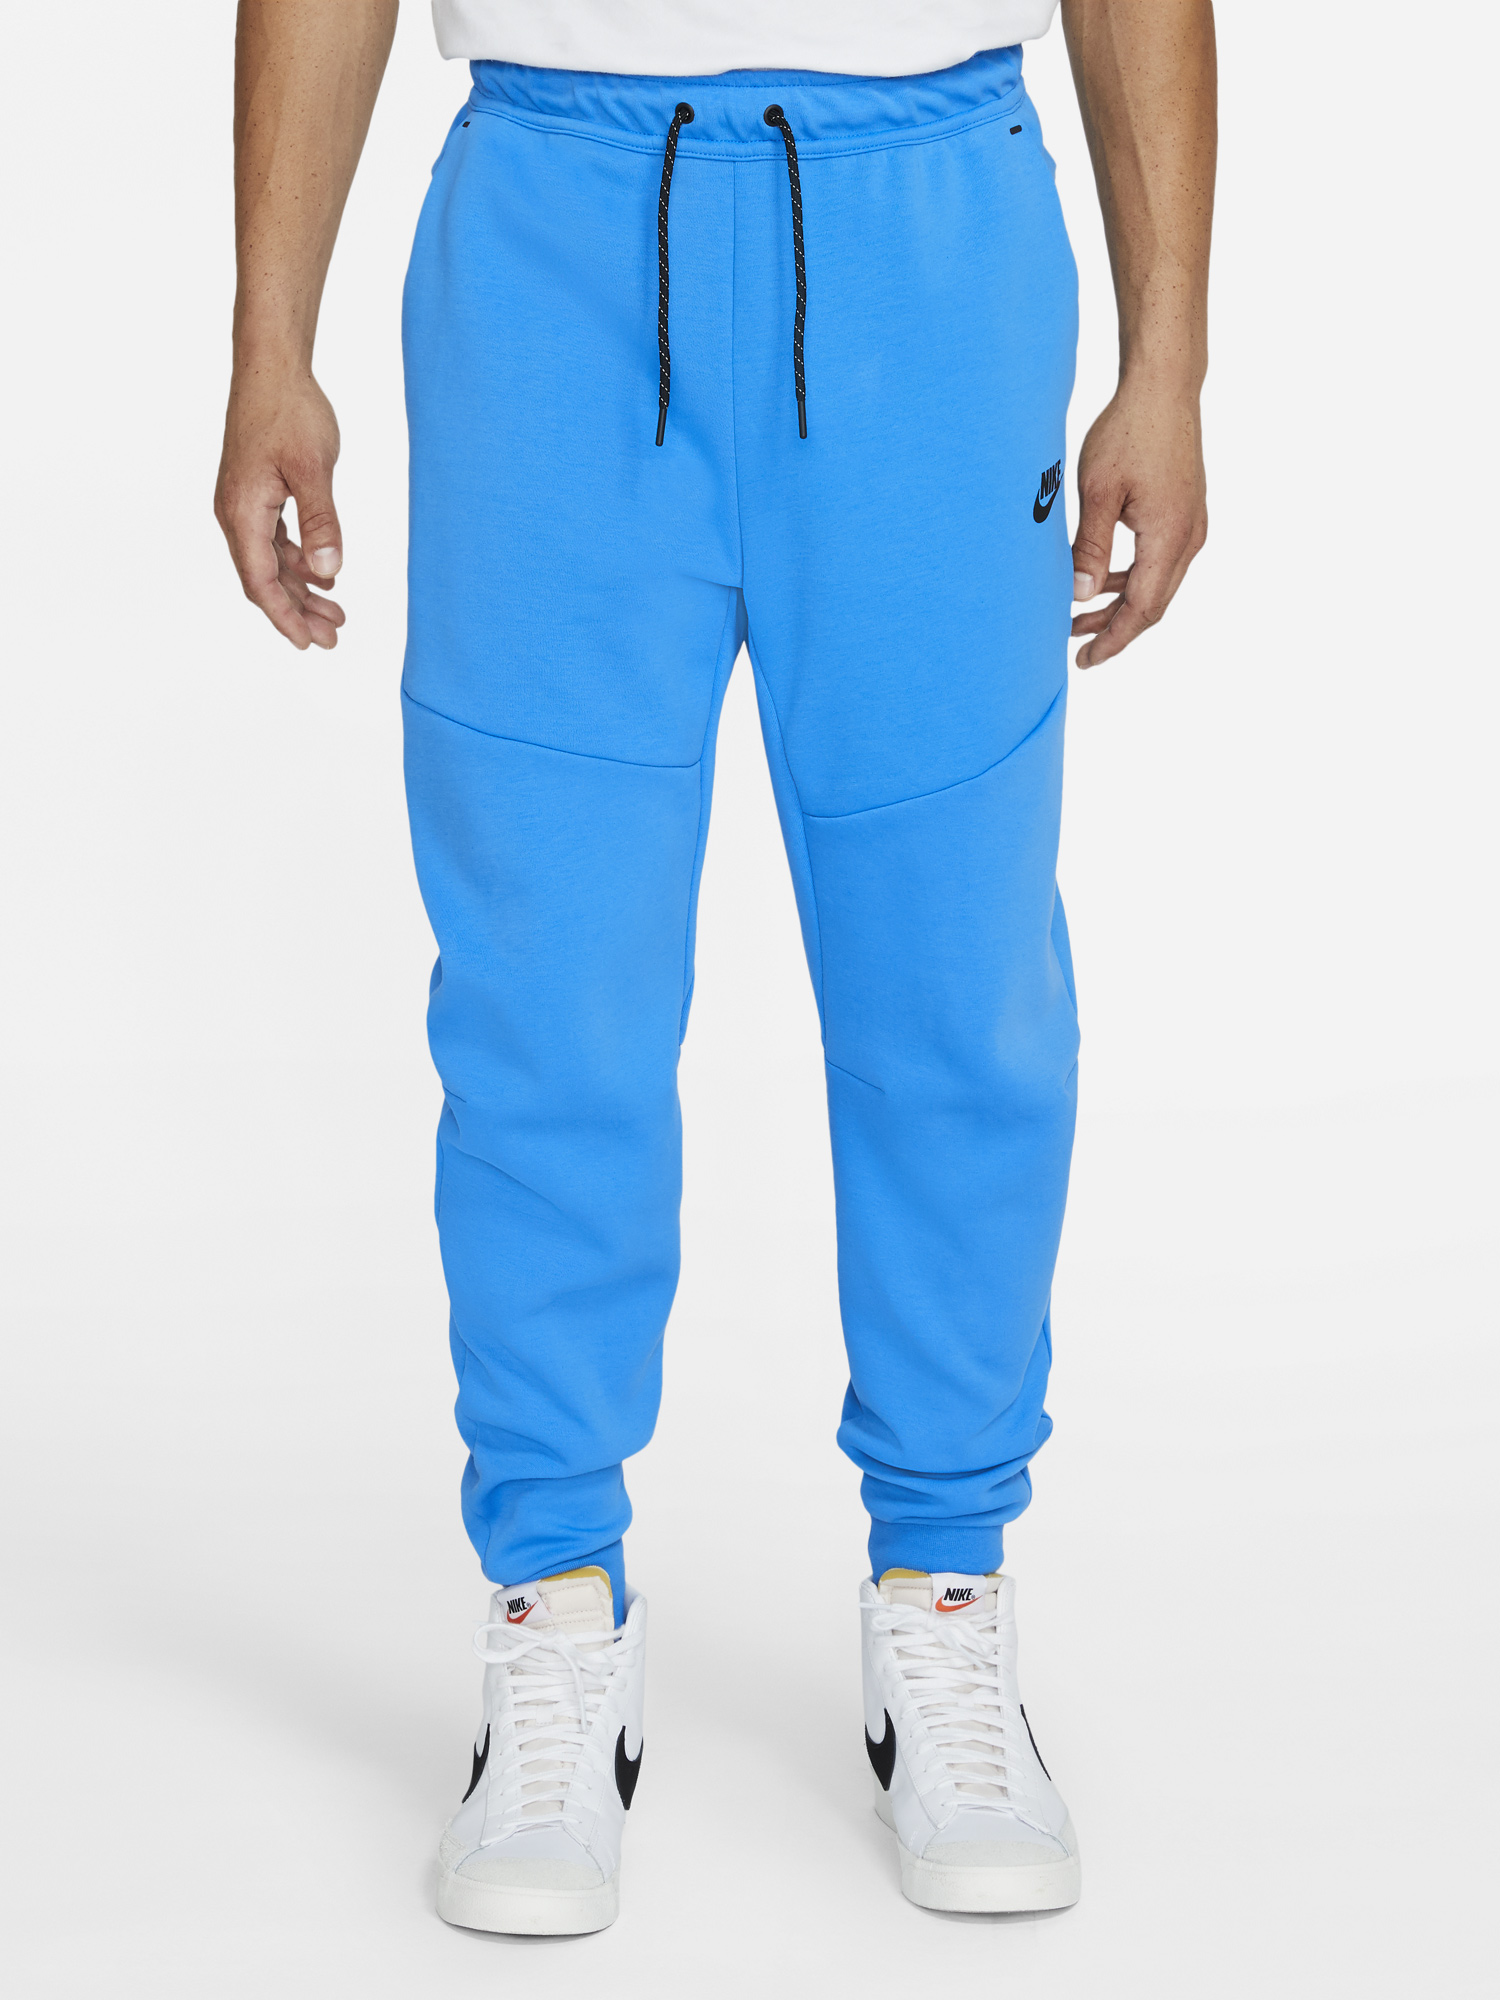 nike-tech-fleece-pants-light-photo-blue